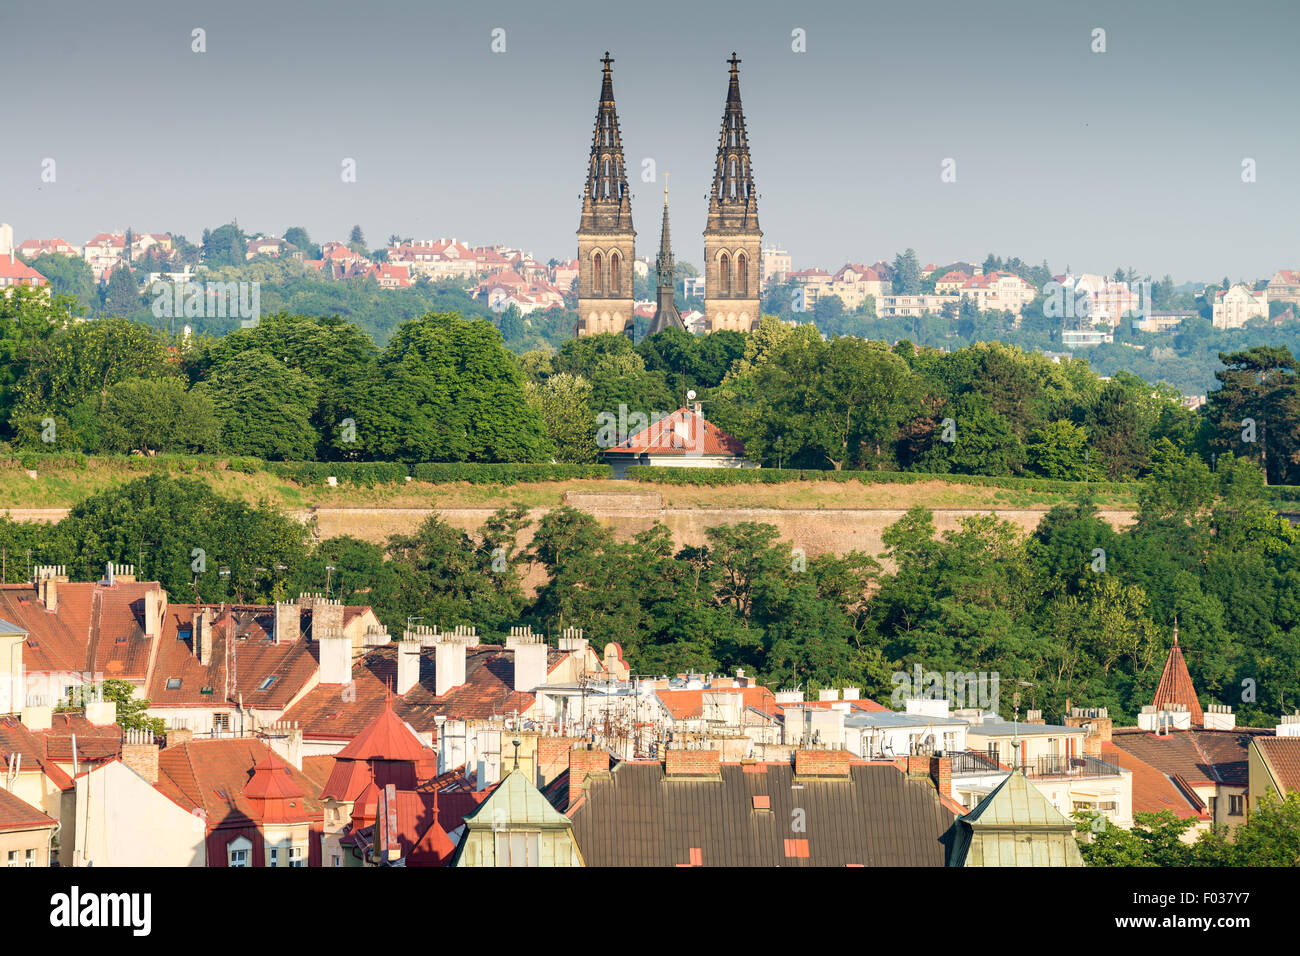 Vysehrad, Prag, Tschechien - Türme der Kapitelsaal Church of Saint Peter and Paul Stockfoto